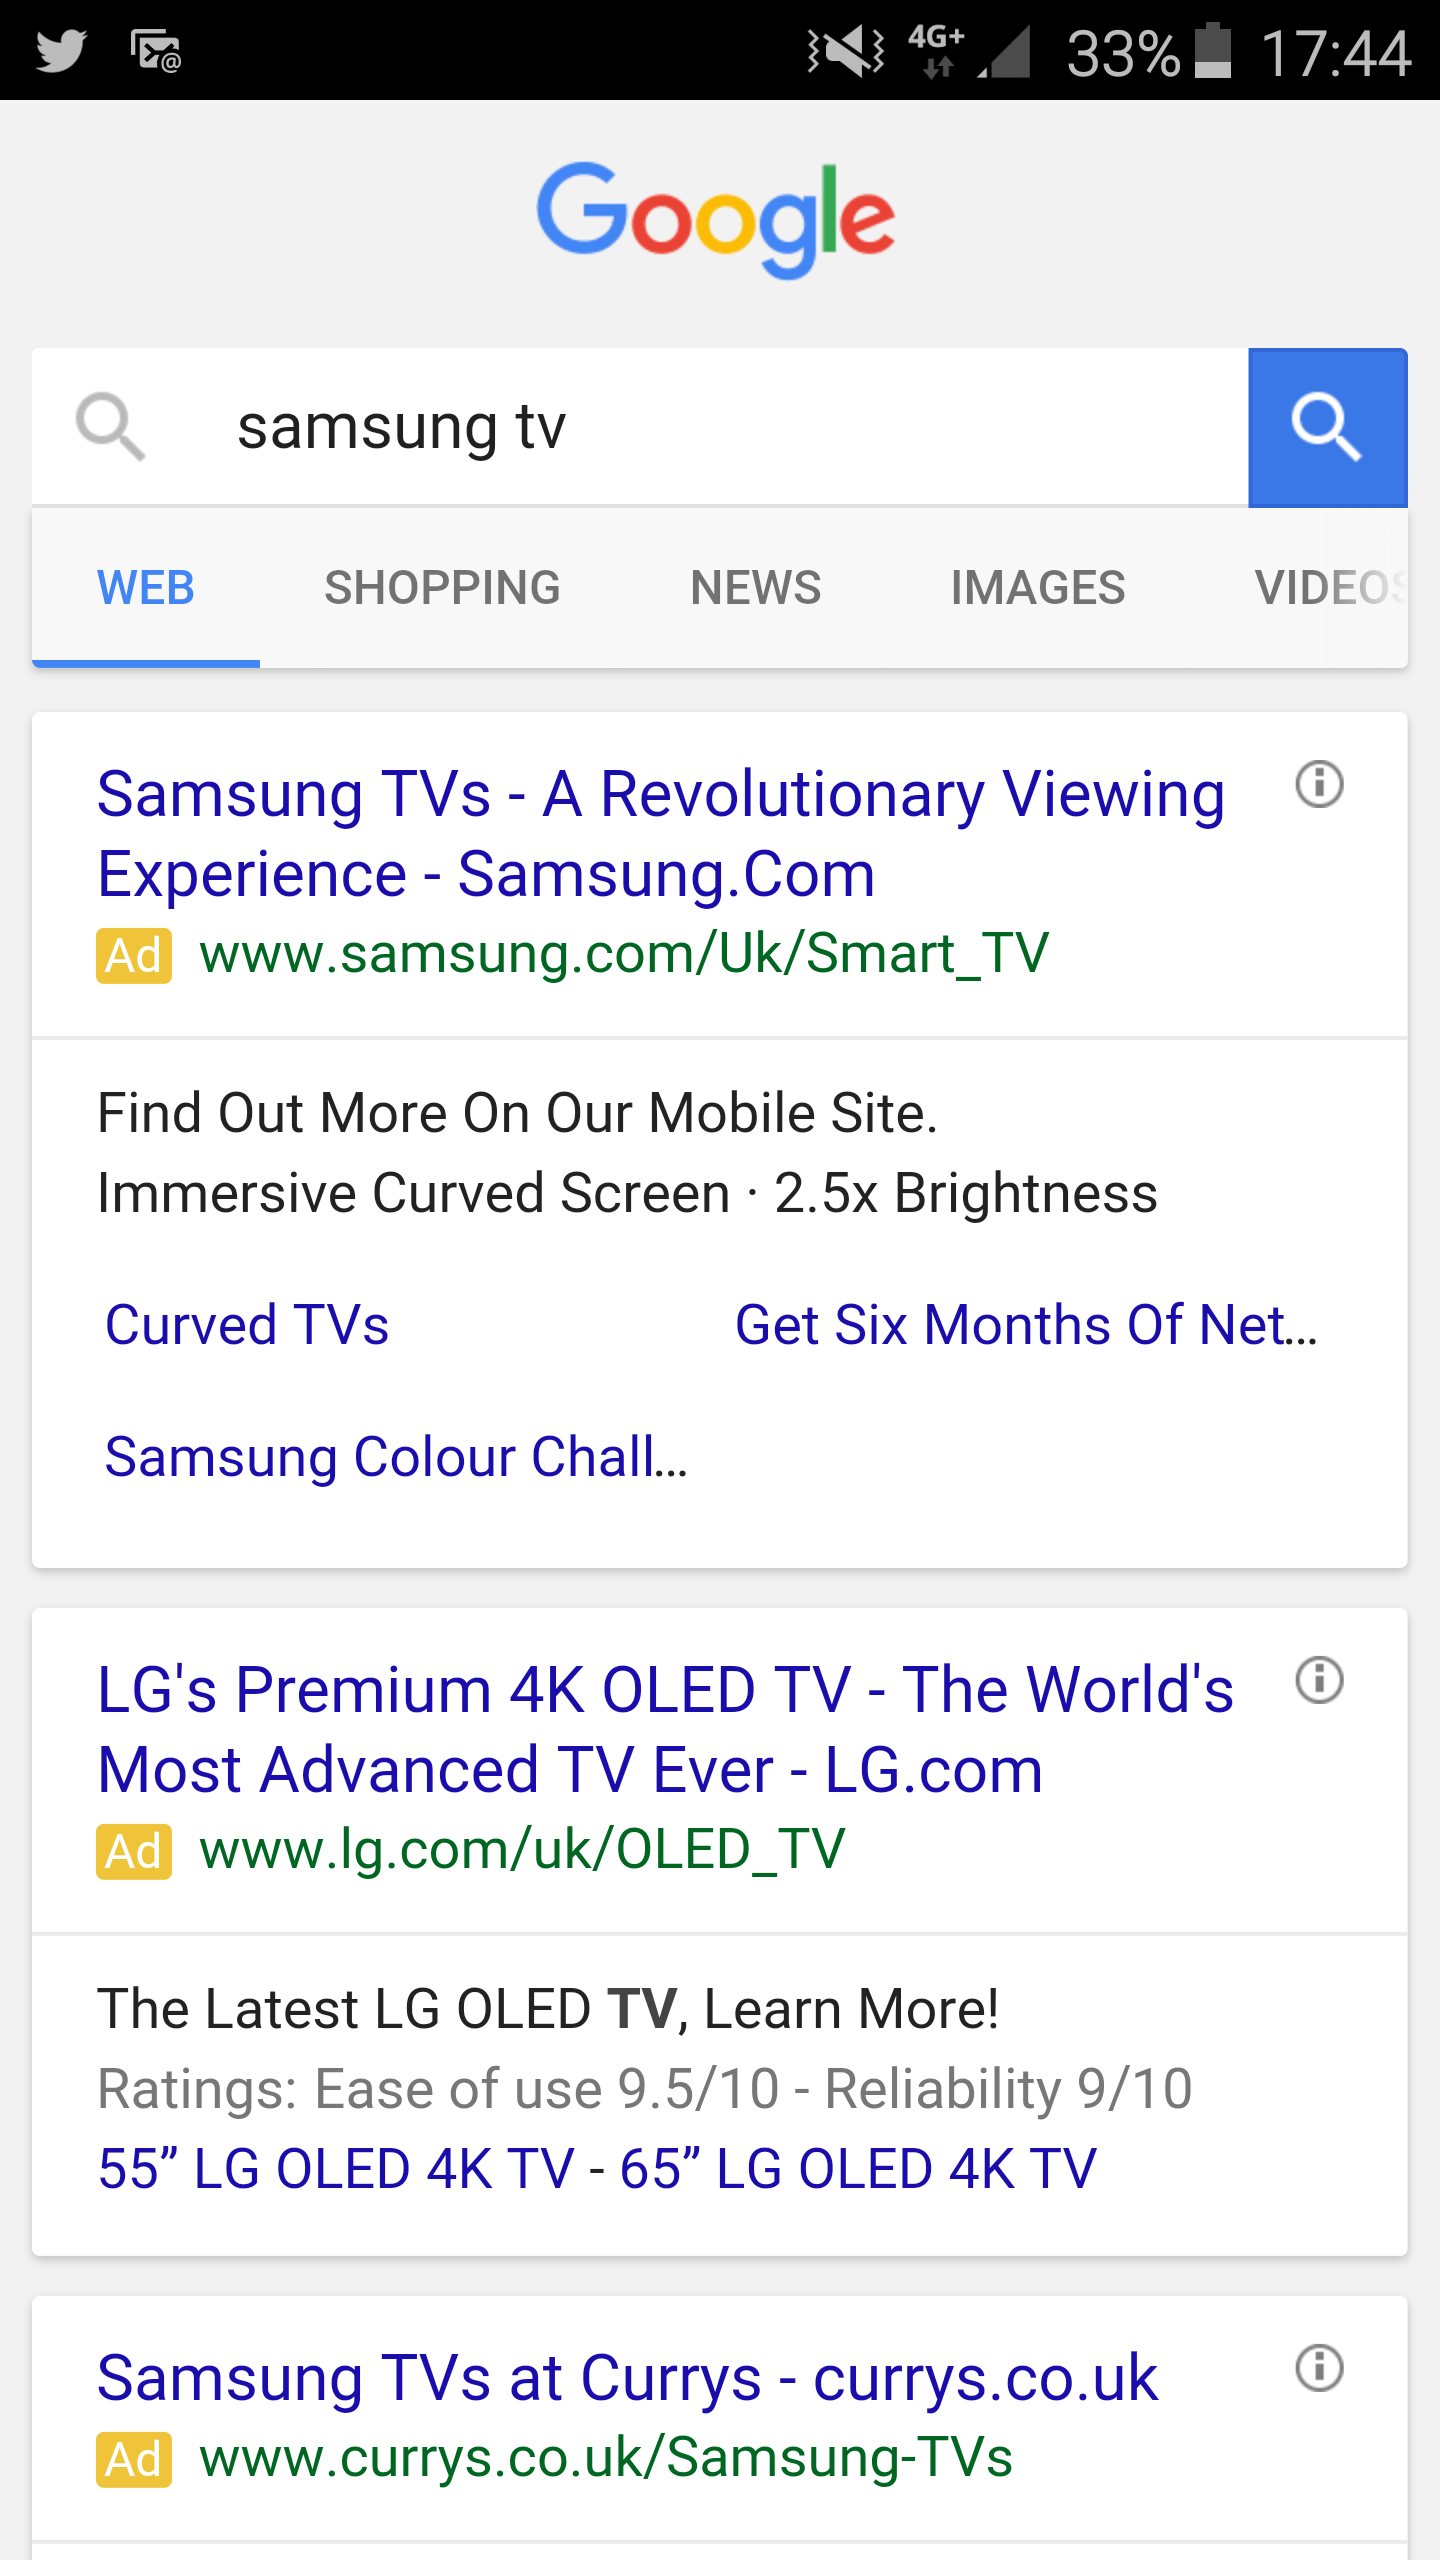 Google ad for Samsung TV